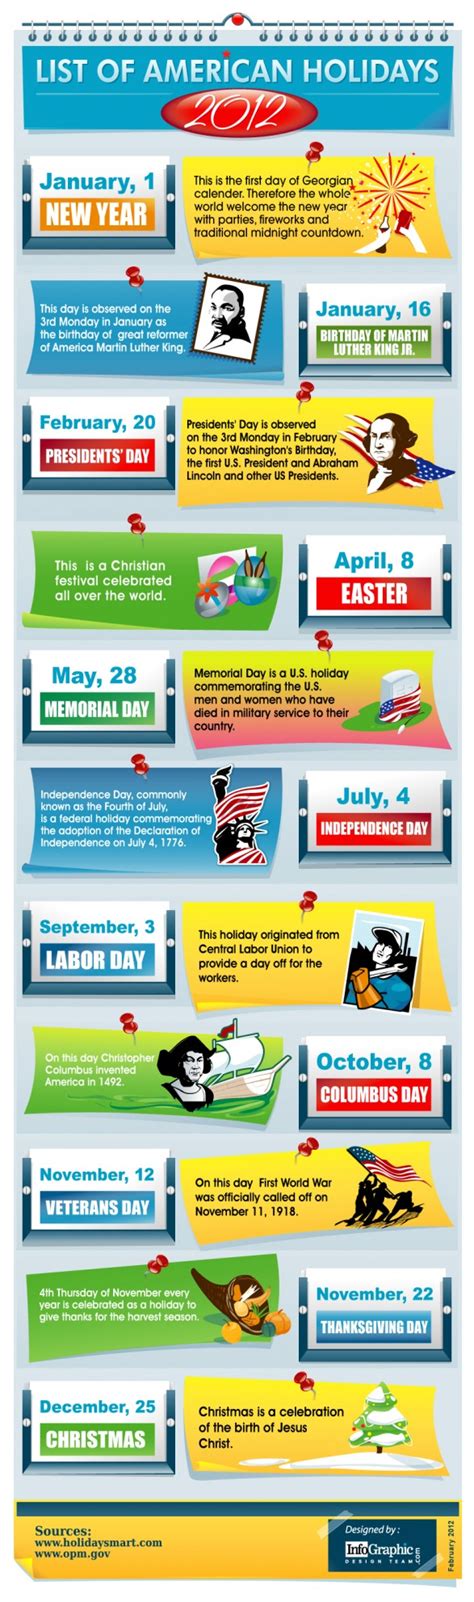 List Of American Holidays 2012 American Holidays American Holiday